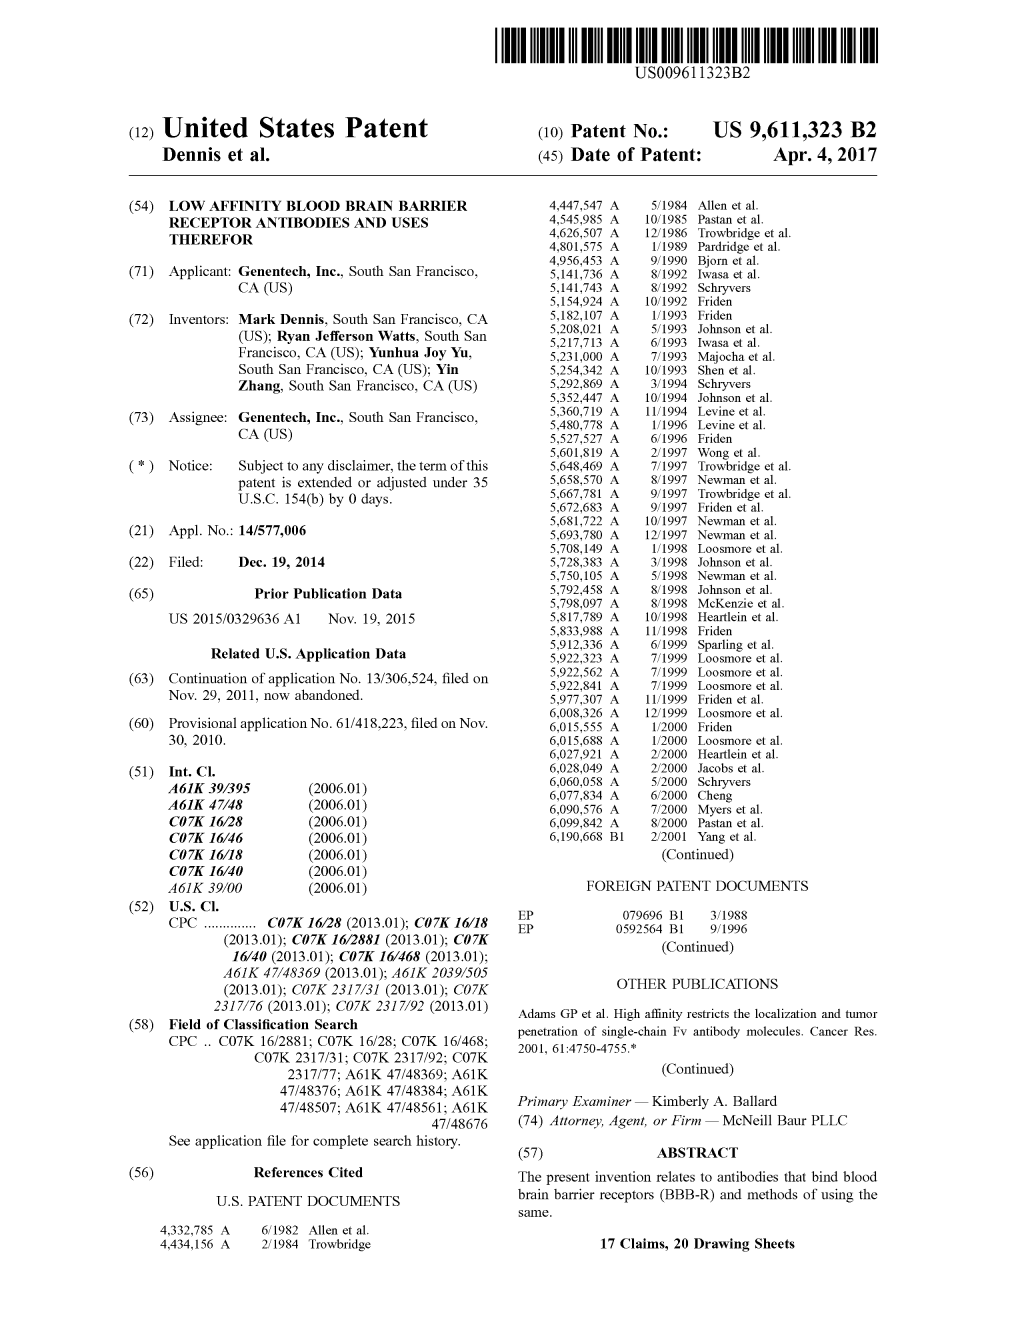 (12) United States Patent (10) Patent No.: US 9,611,323 B2 Dennis Et Al